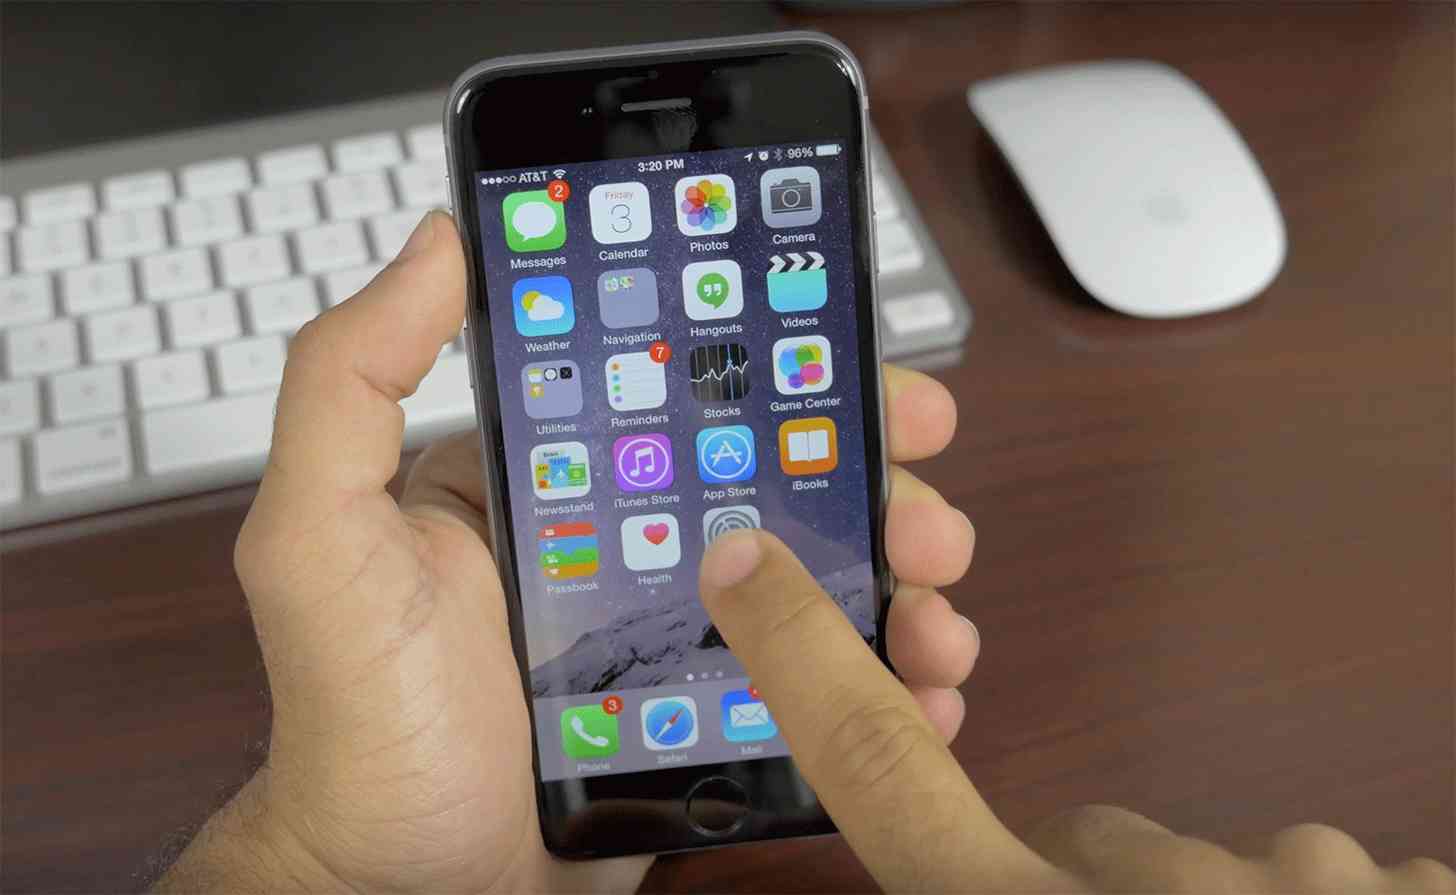 iPhone 6 preinstalled Apple apps